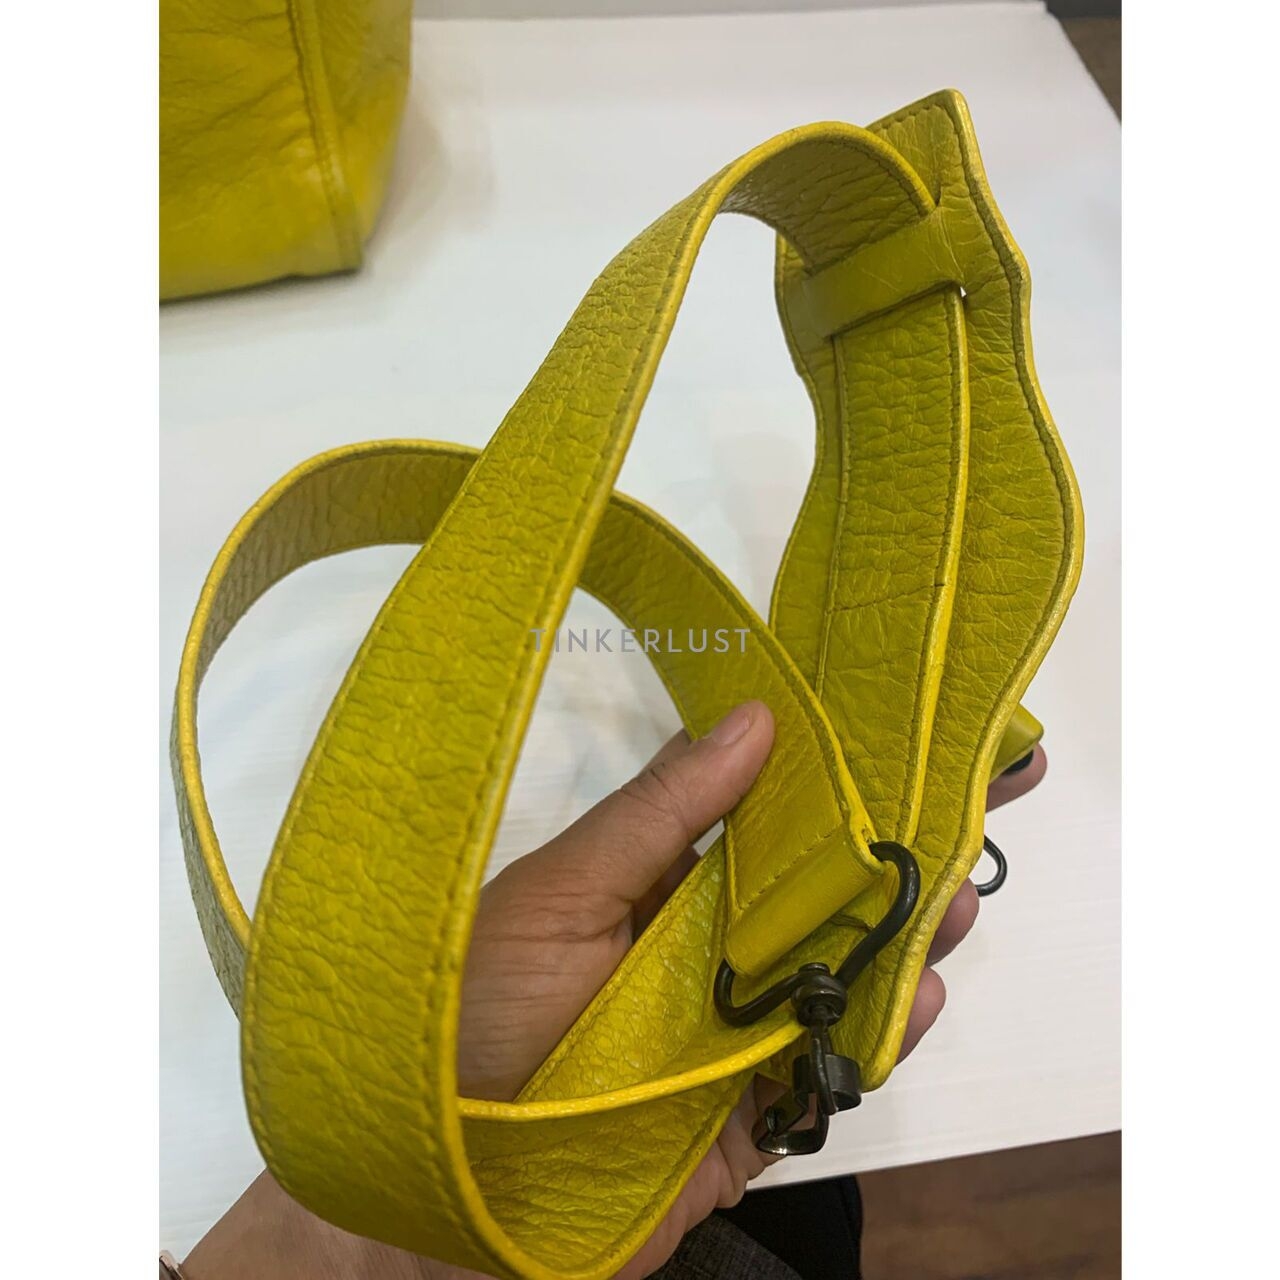 Balenciaga Twiggy Bag Reguler Leather Yellow Satchel